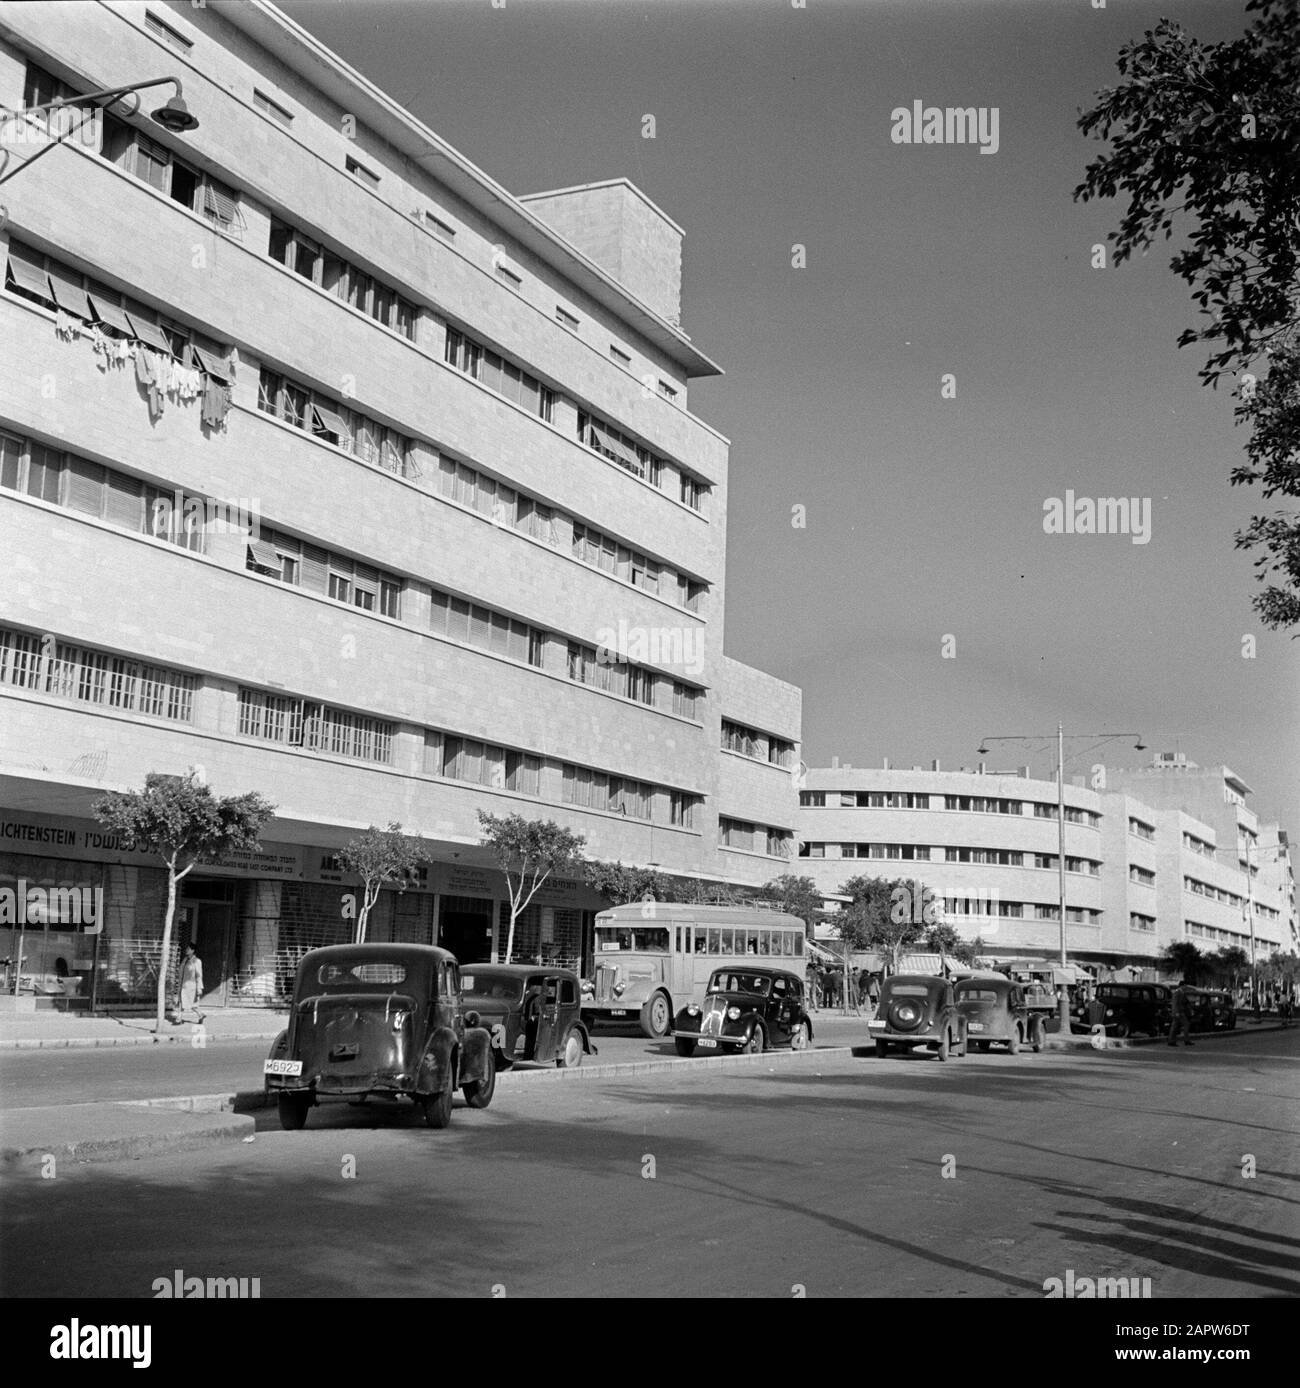 Israel 1948-1949: Haifa  Kingsway, the main street of the port area Date: 1948 Location: Haifa, Israel Keywords: cars, buses, apartment blocks, street images Stock Photo